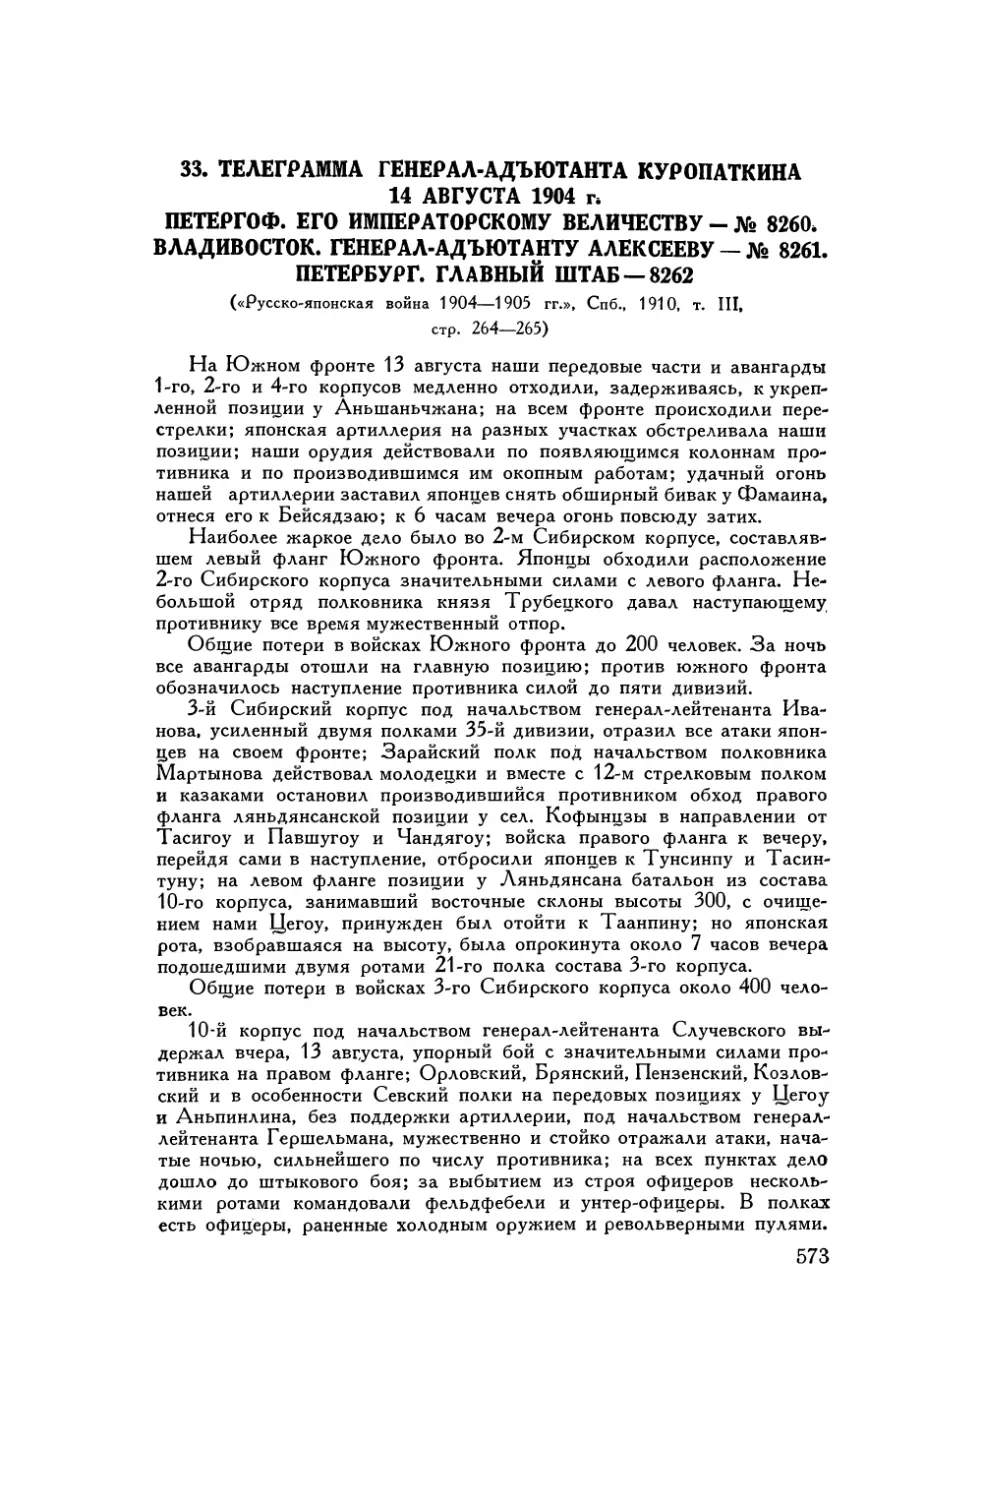 33. Телеграмма генерал-адъютанта Куропаткина от 14 августа 1904 г.